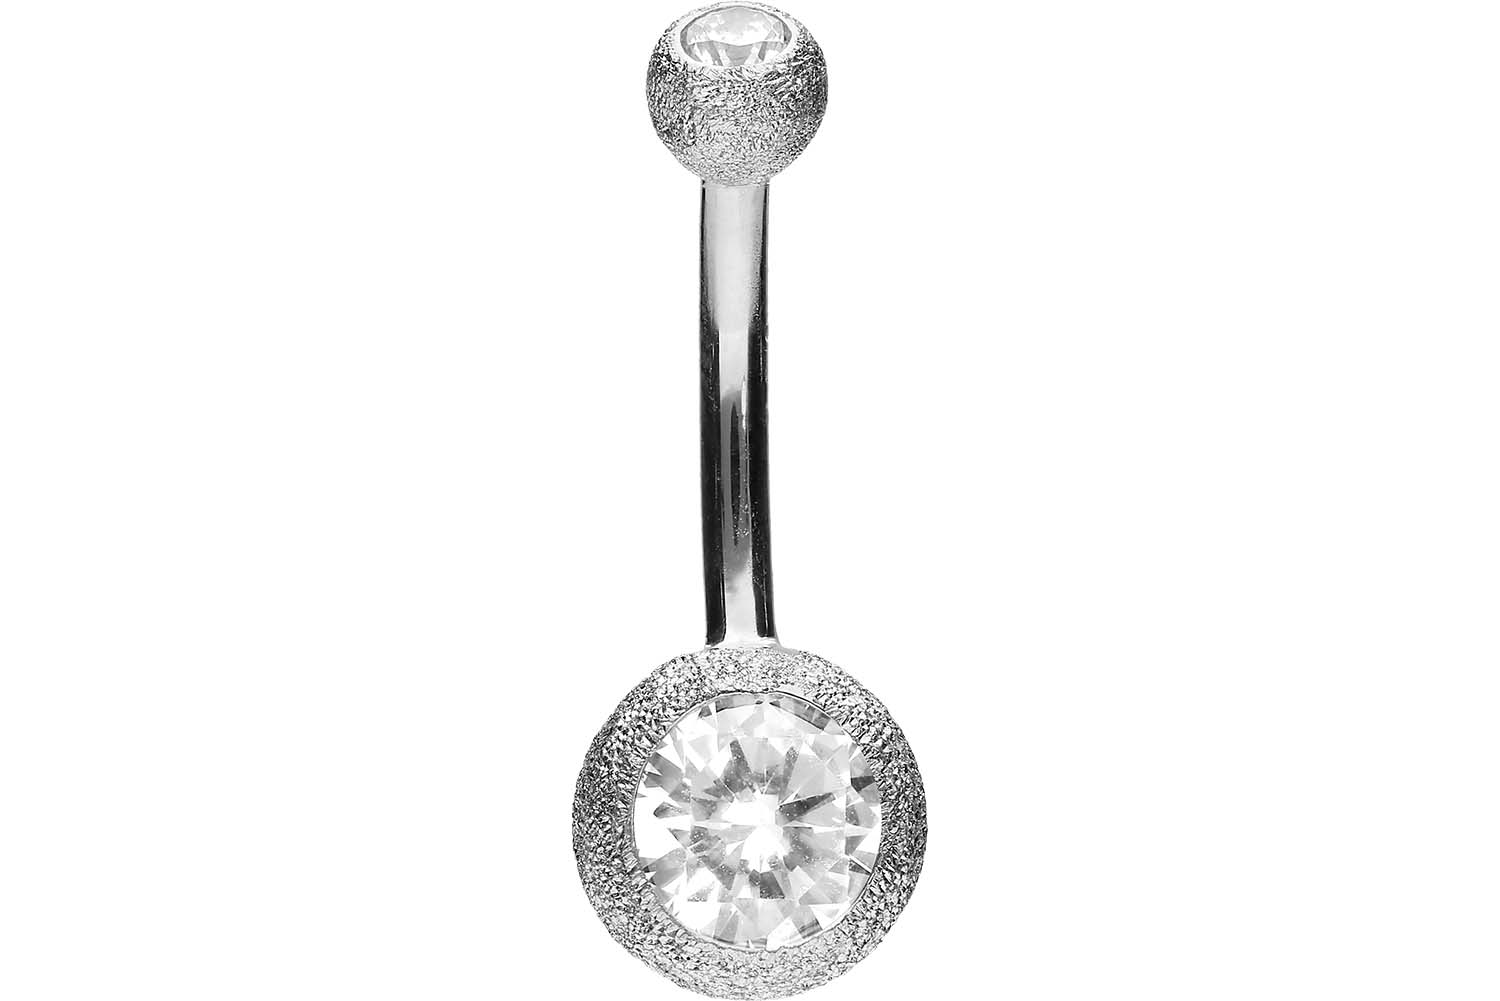 Bauchnabelpiercing 18karat Echtgold Weissgold Diamantoptik mit zwei Kristallkugeln